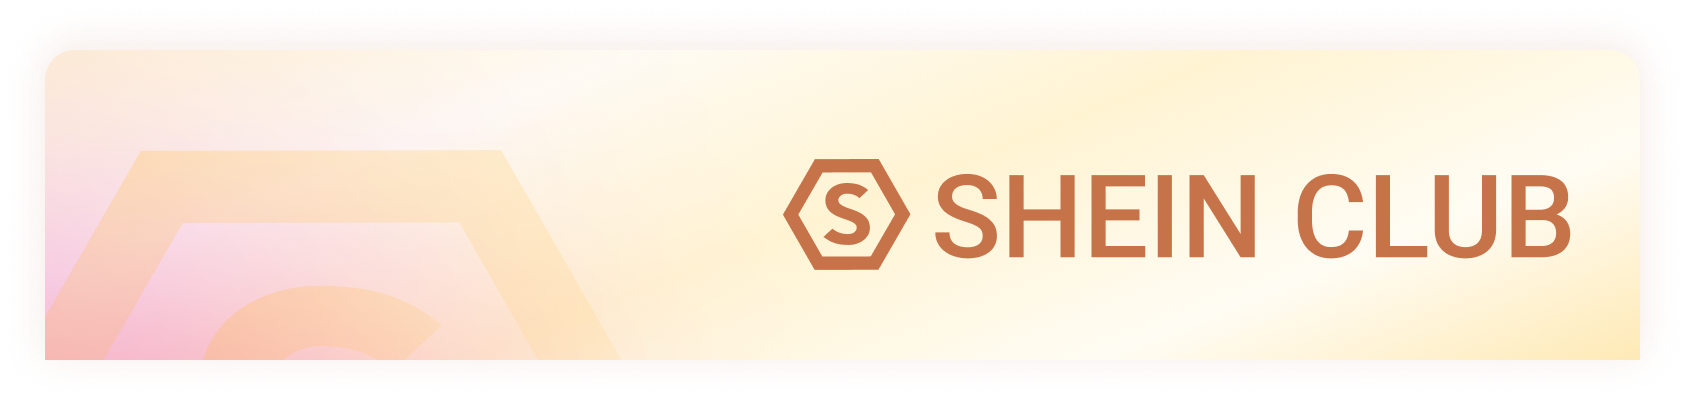 SHEIN CLUB Invite  Shein, Club, Invitations